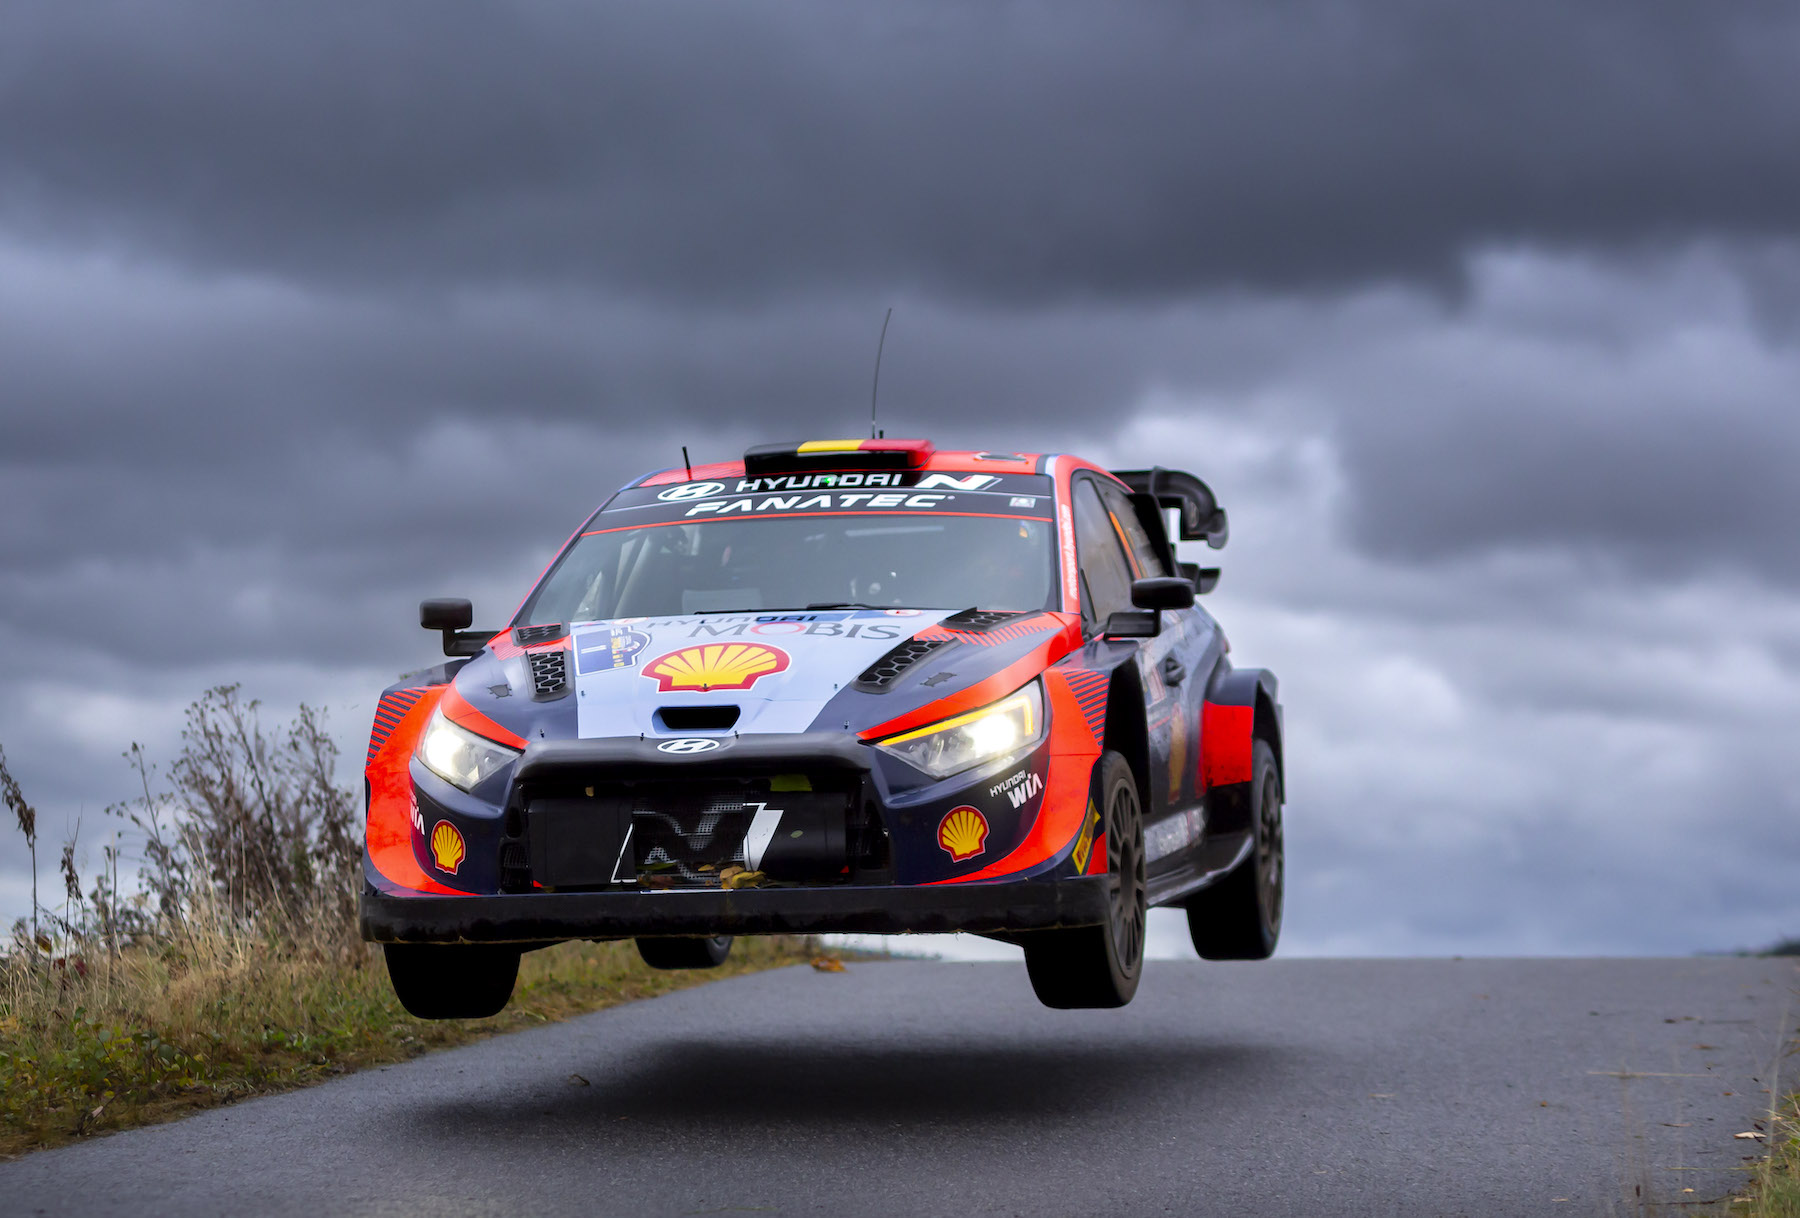 Hyundai Tops WRC Central European Rally, Trails Toyota Heading to Japan